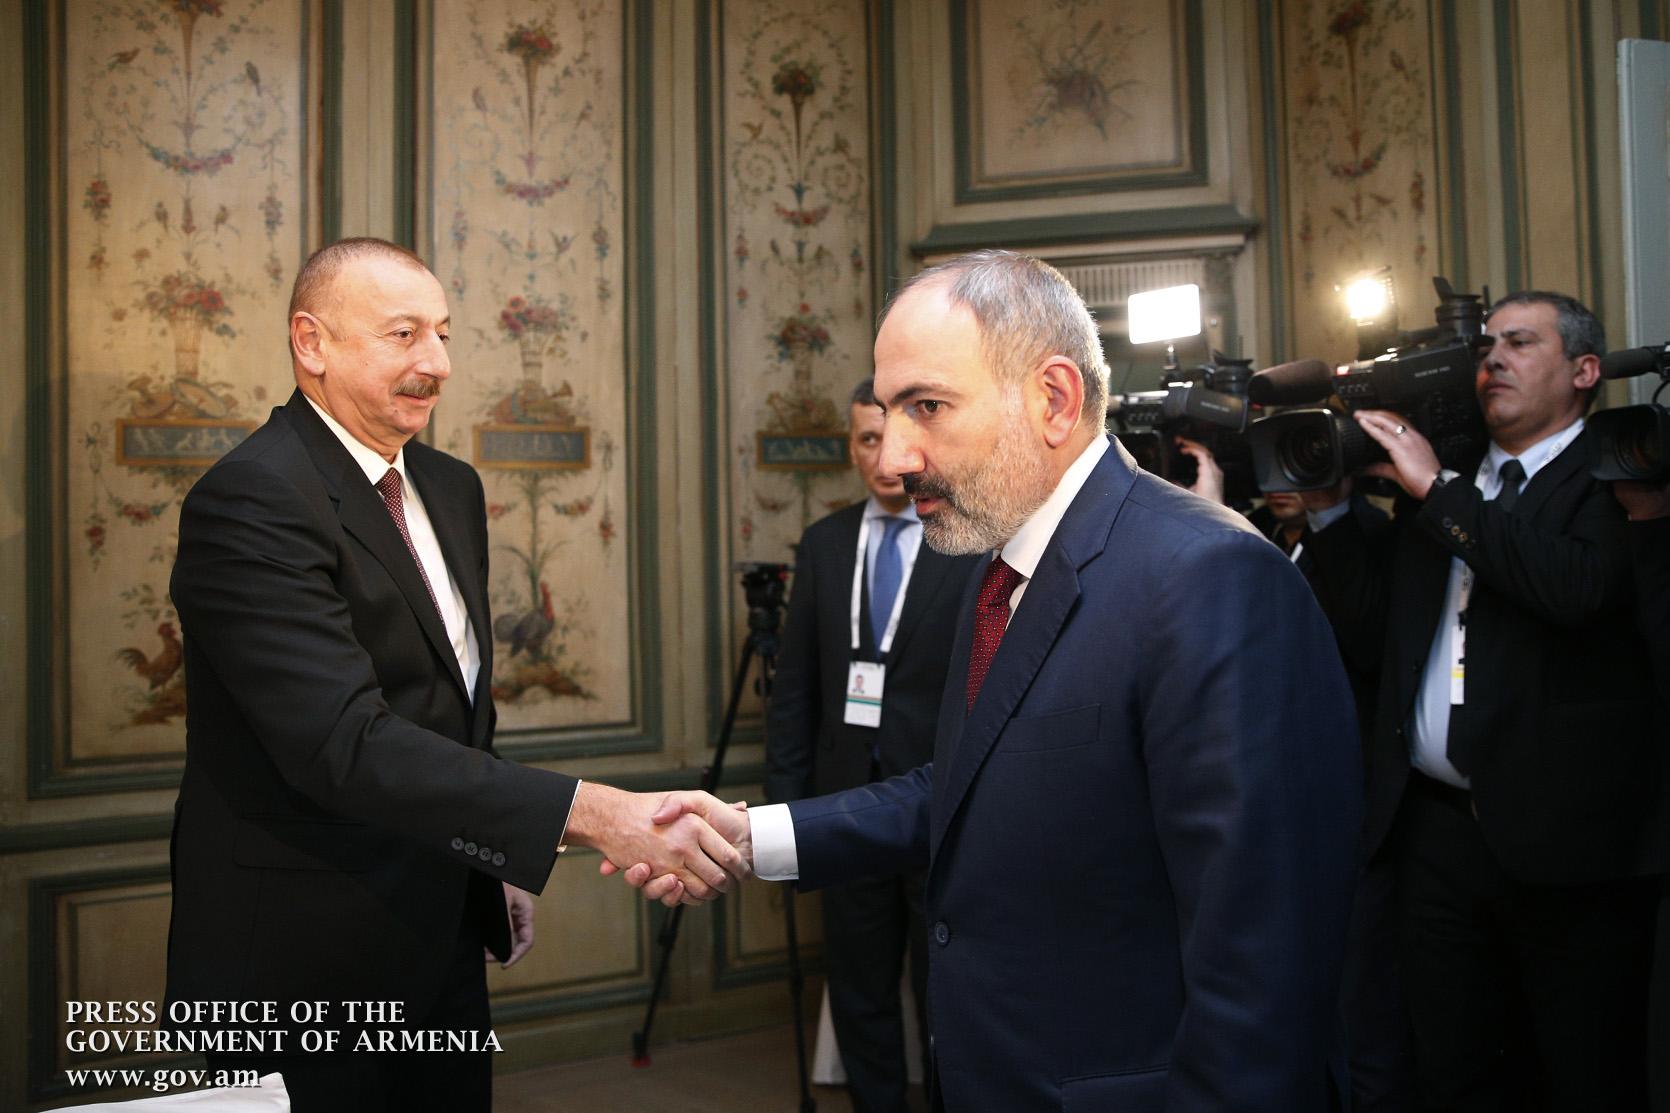 Negotiations underway on next Pashinyan-Aliyev meeting